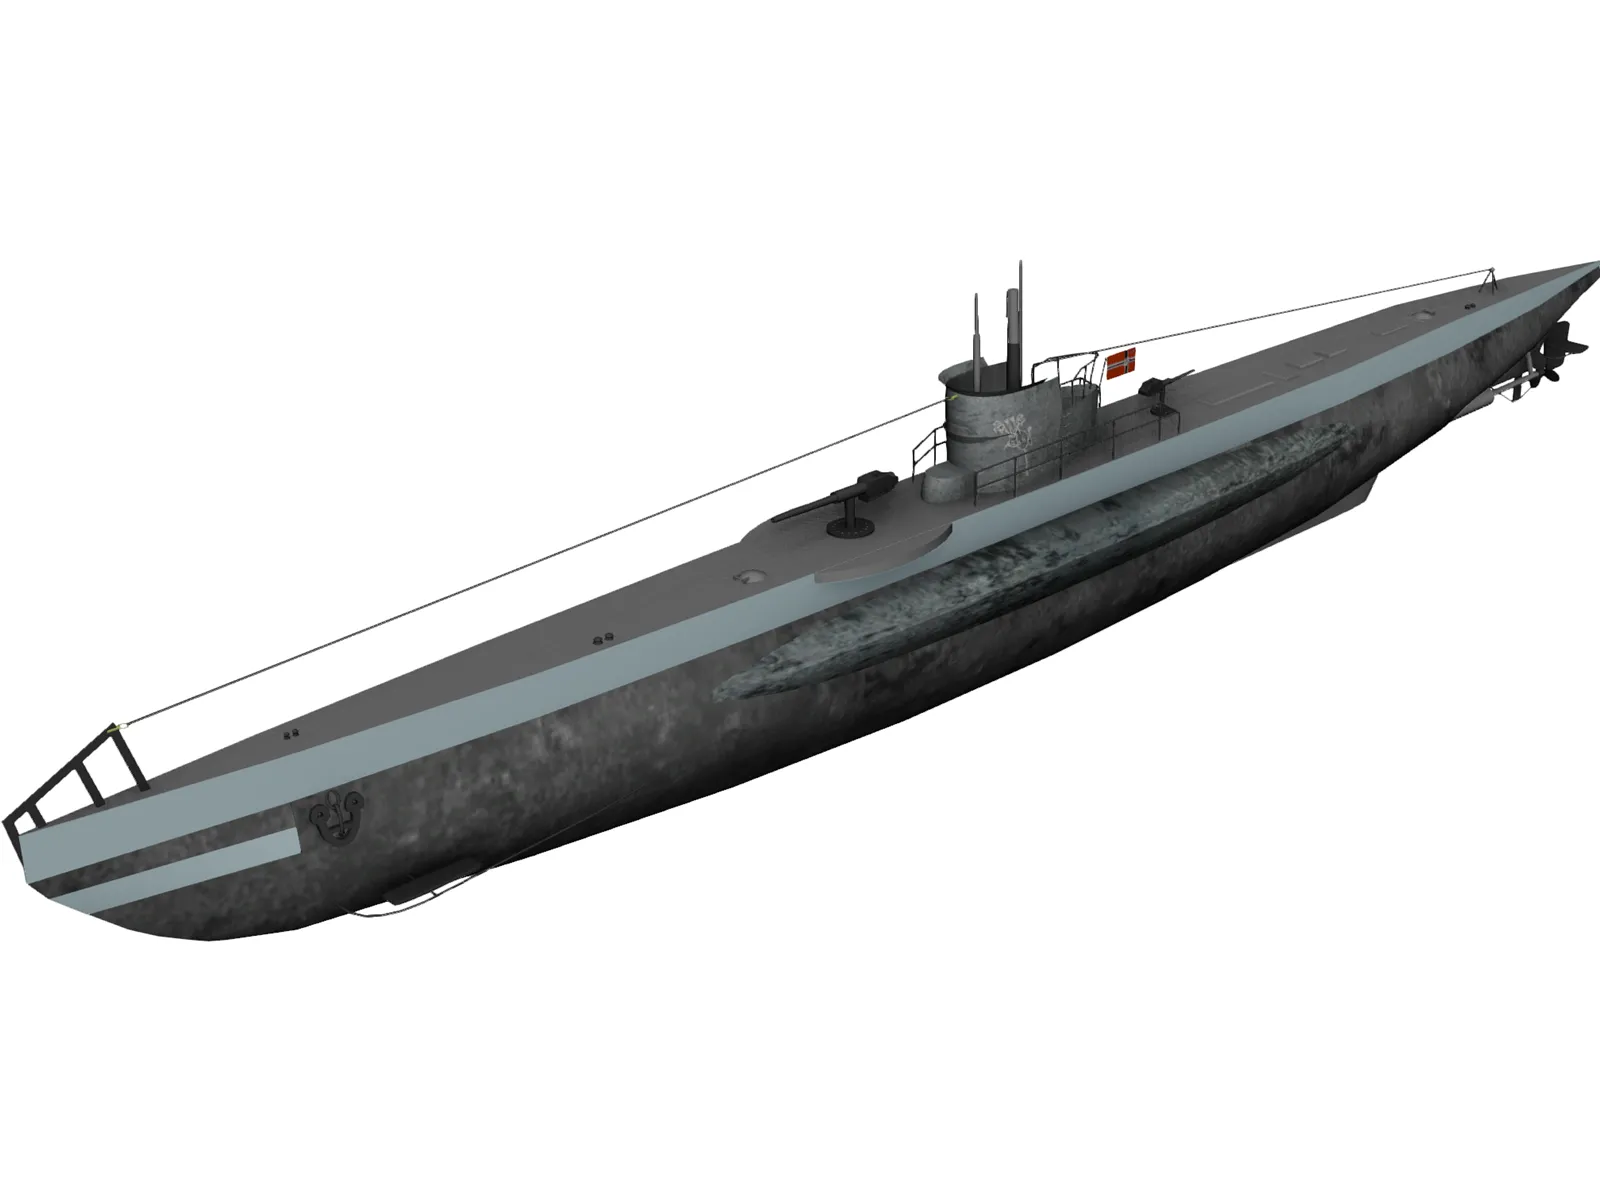 DKM U-boat type VII 3D Model